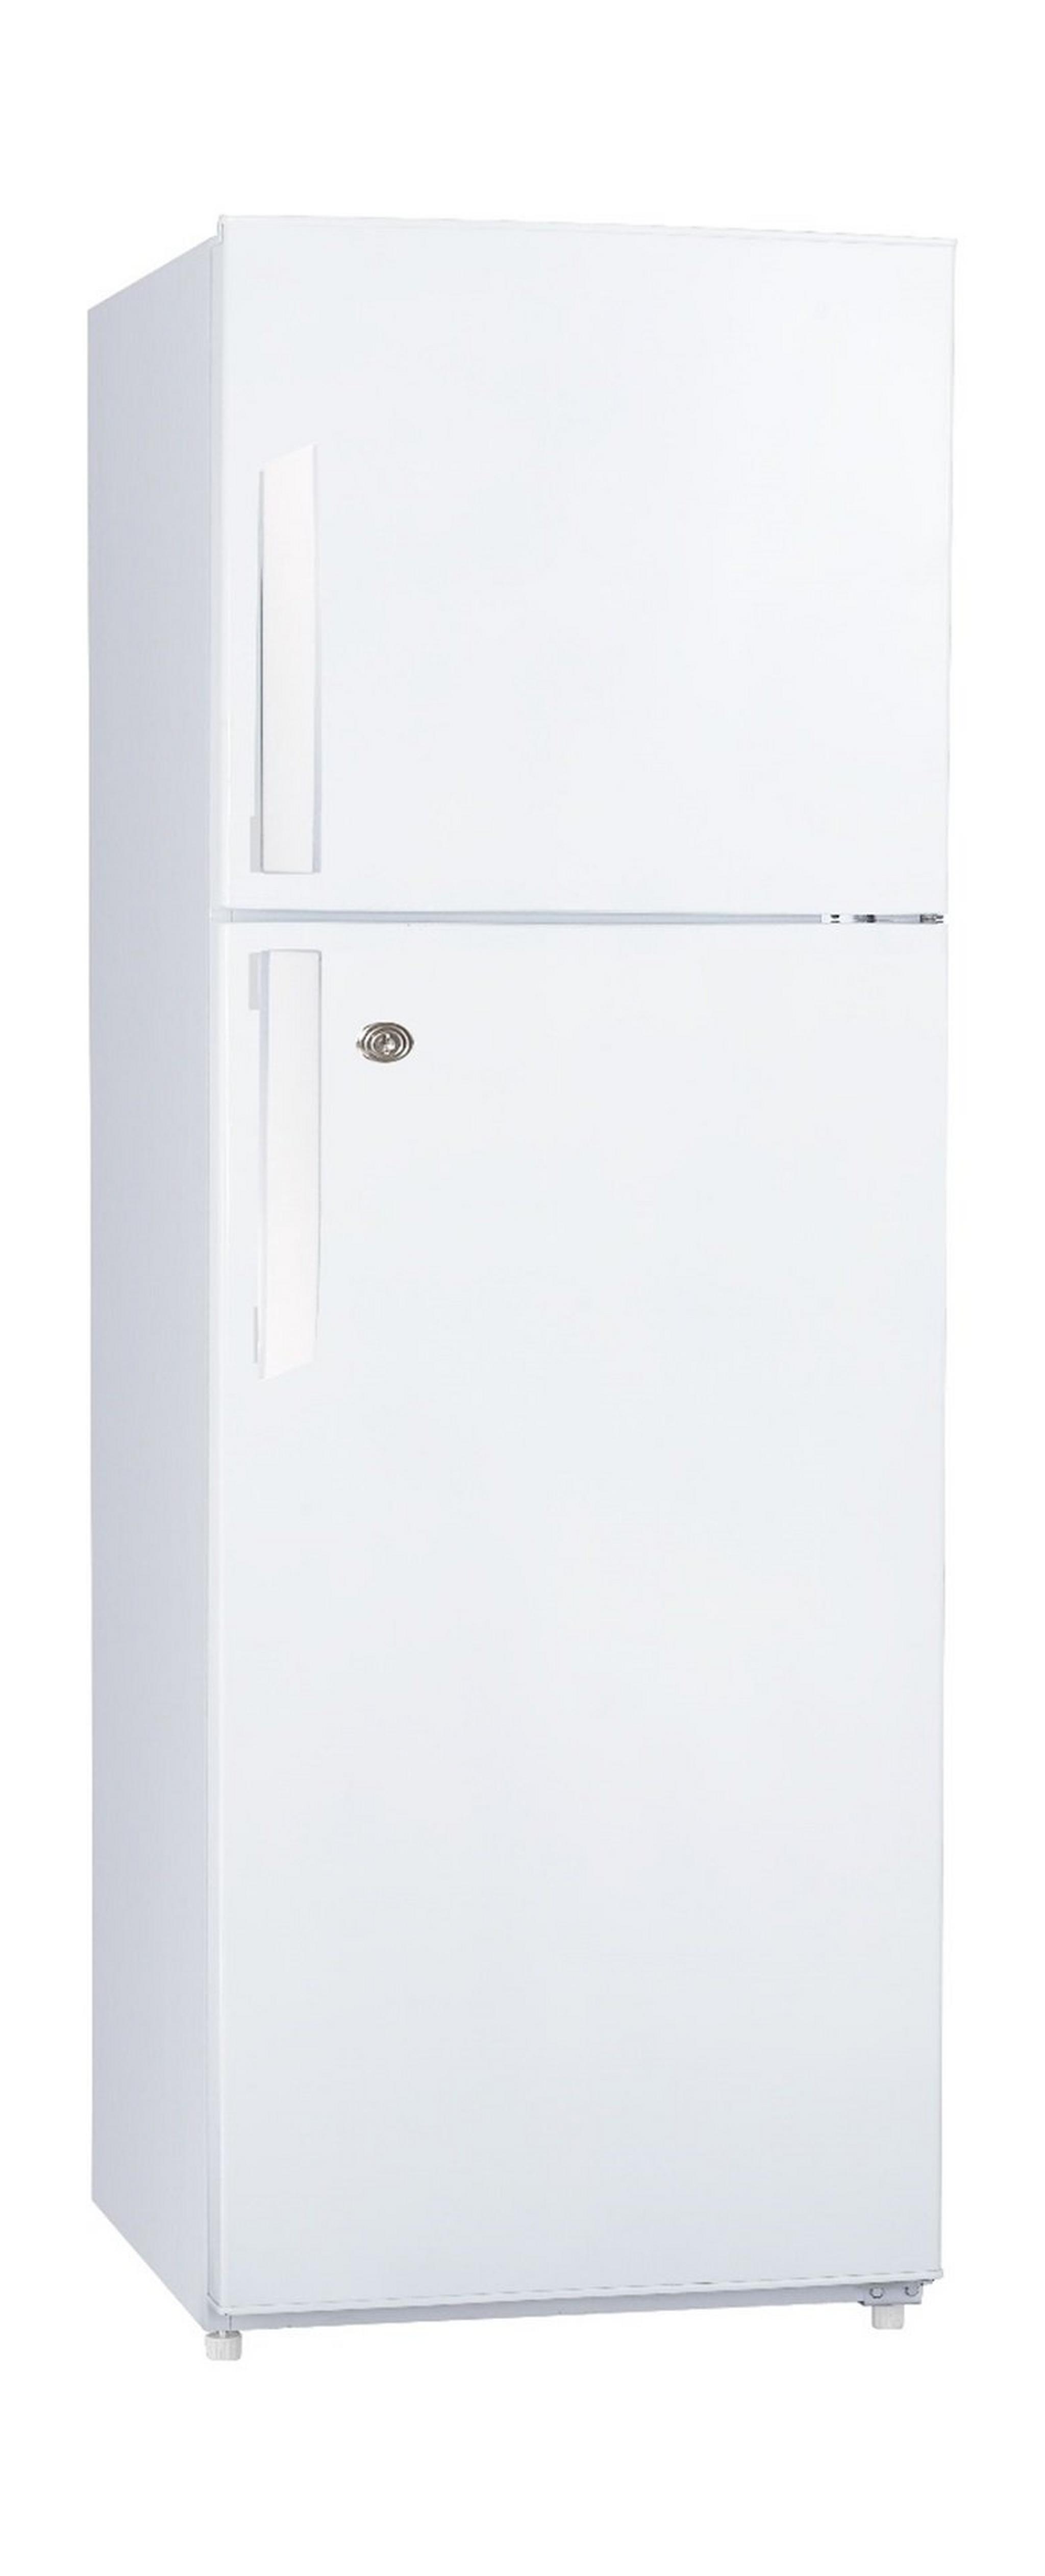 Haier 15.1 Cubic Feet Top Mount Refrigerator - HRF-480N